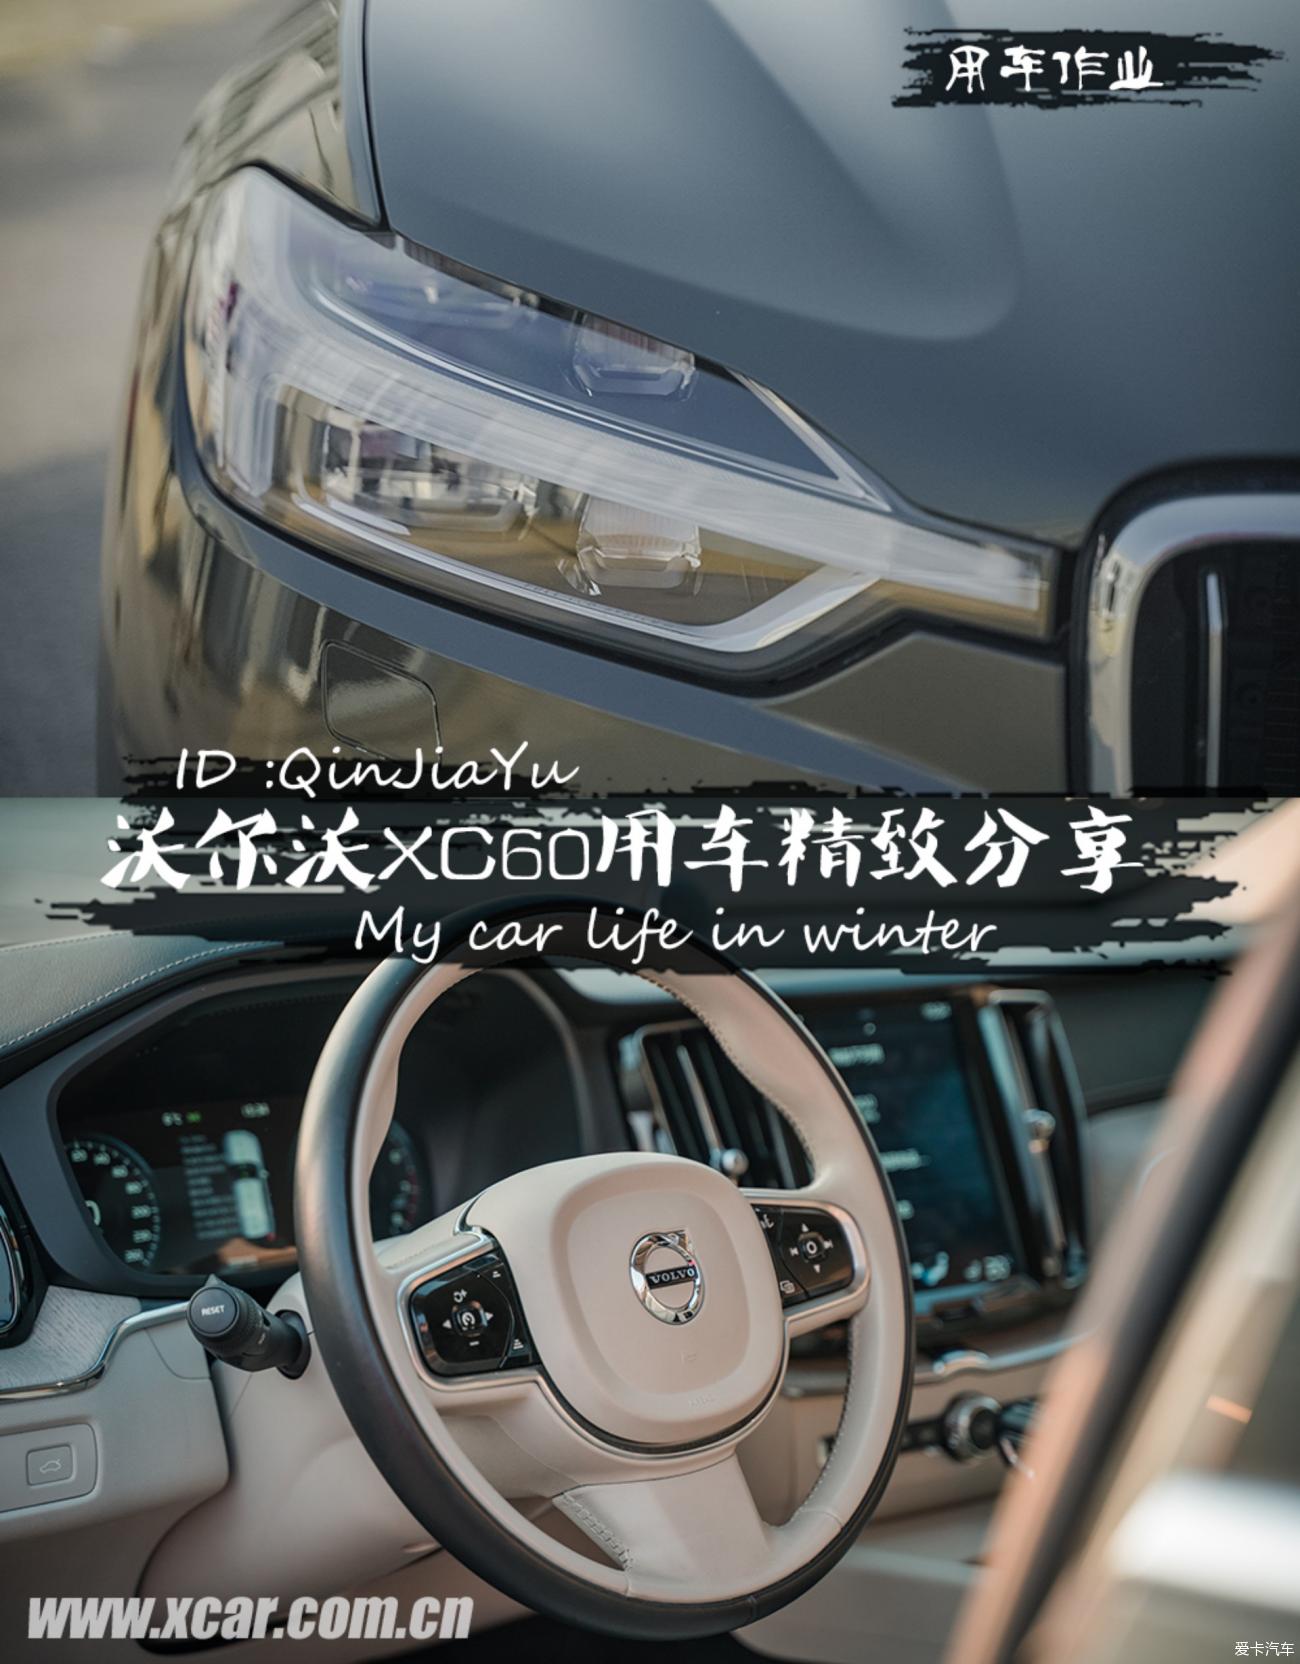 【QinJiaYu】沃尔沃XC60精致用车分享